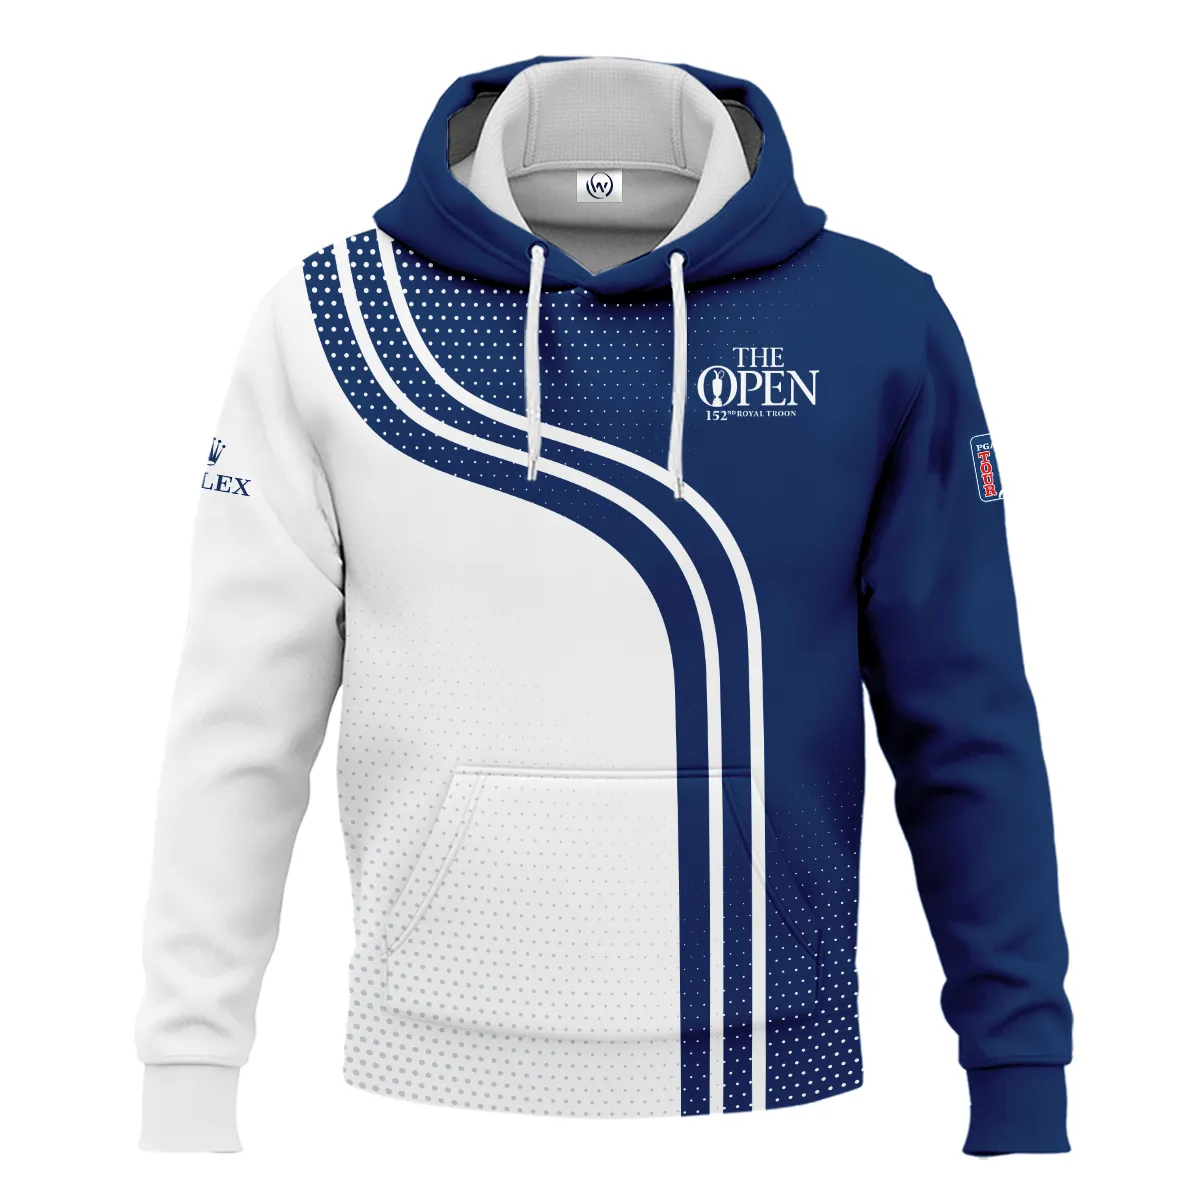 Golf Blue Mix White Sport 152nd Open Championship Pinehurst Rolex Hoodie Shirt All Over Prints QTTOP1806A1ROXHD